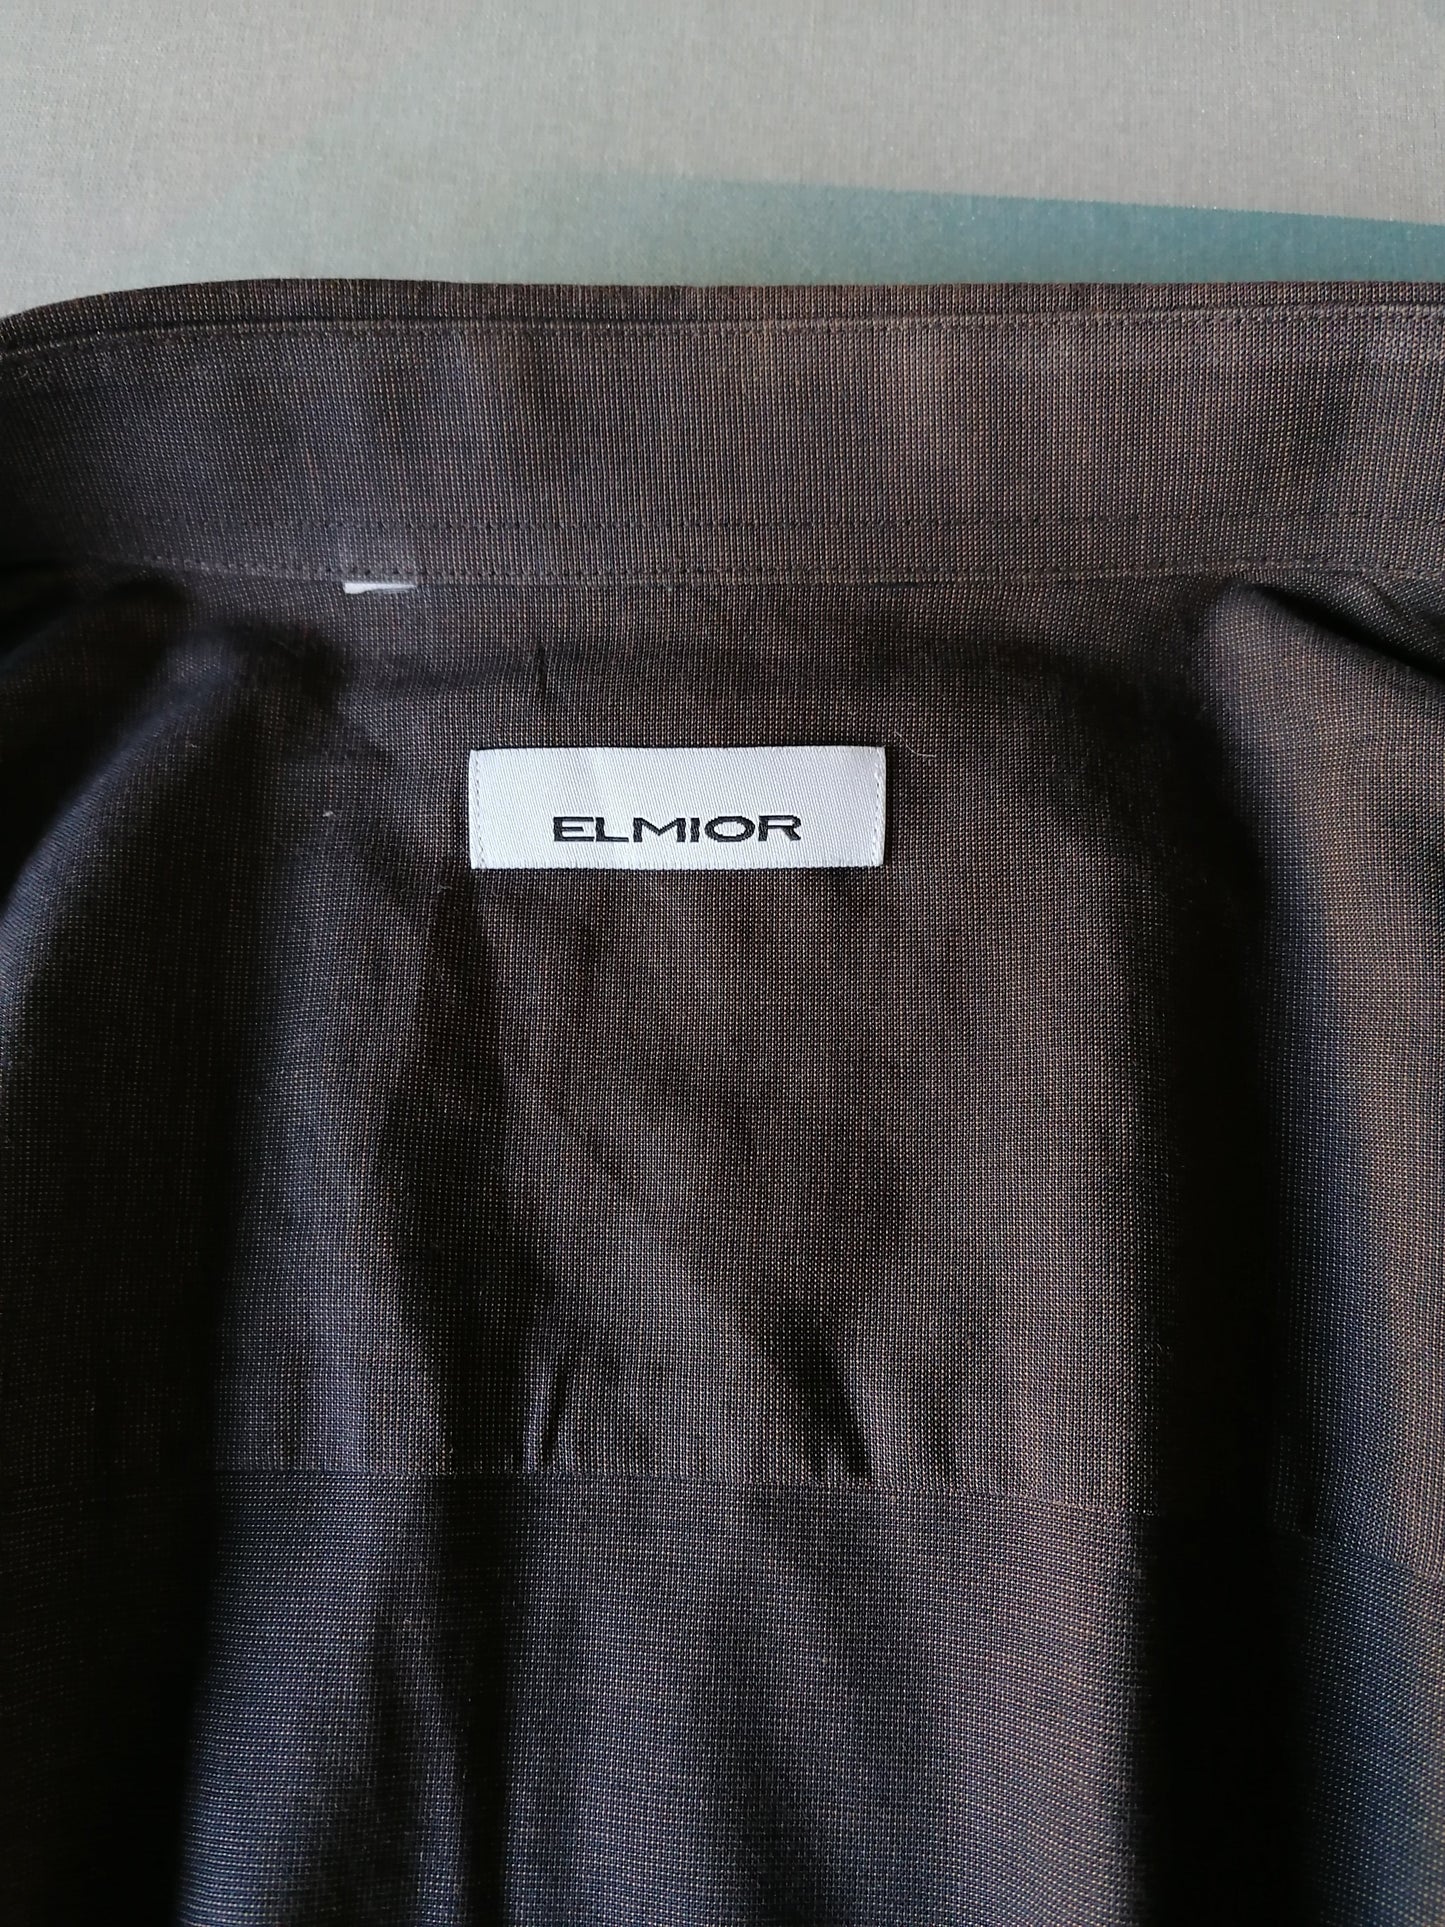 Camisa Elmior. Motivo negro marrón. Tamaño XL